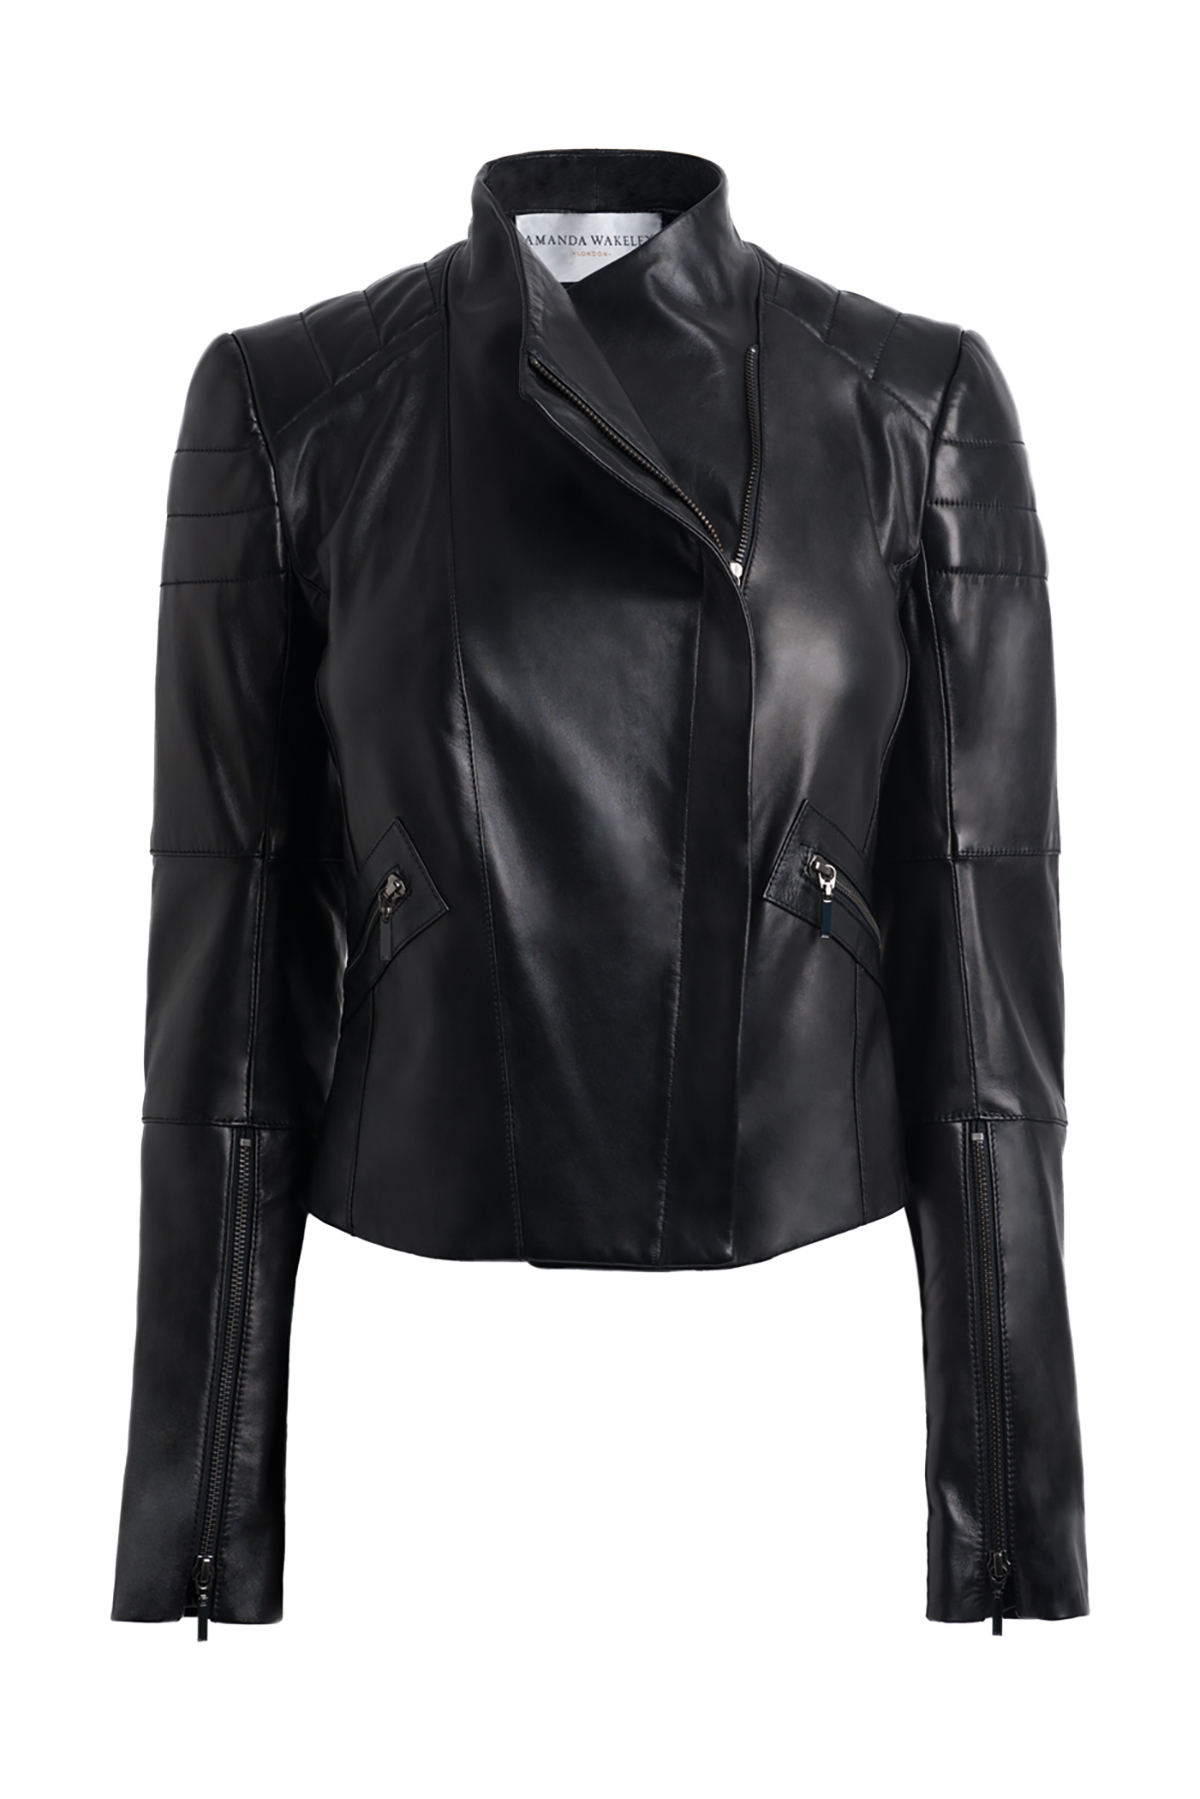 Amanda wakeley Kara Leather Biker Jacket in Black | Lyst